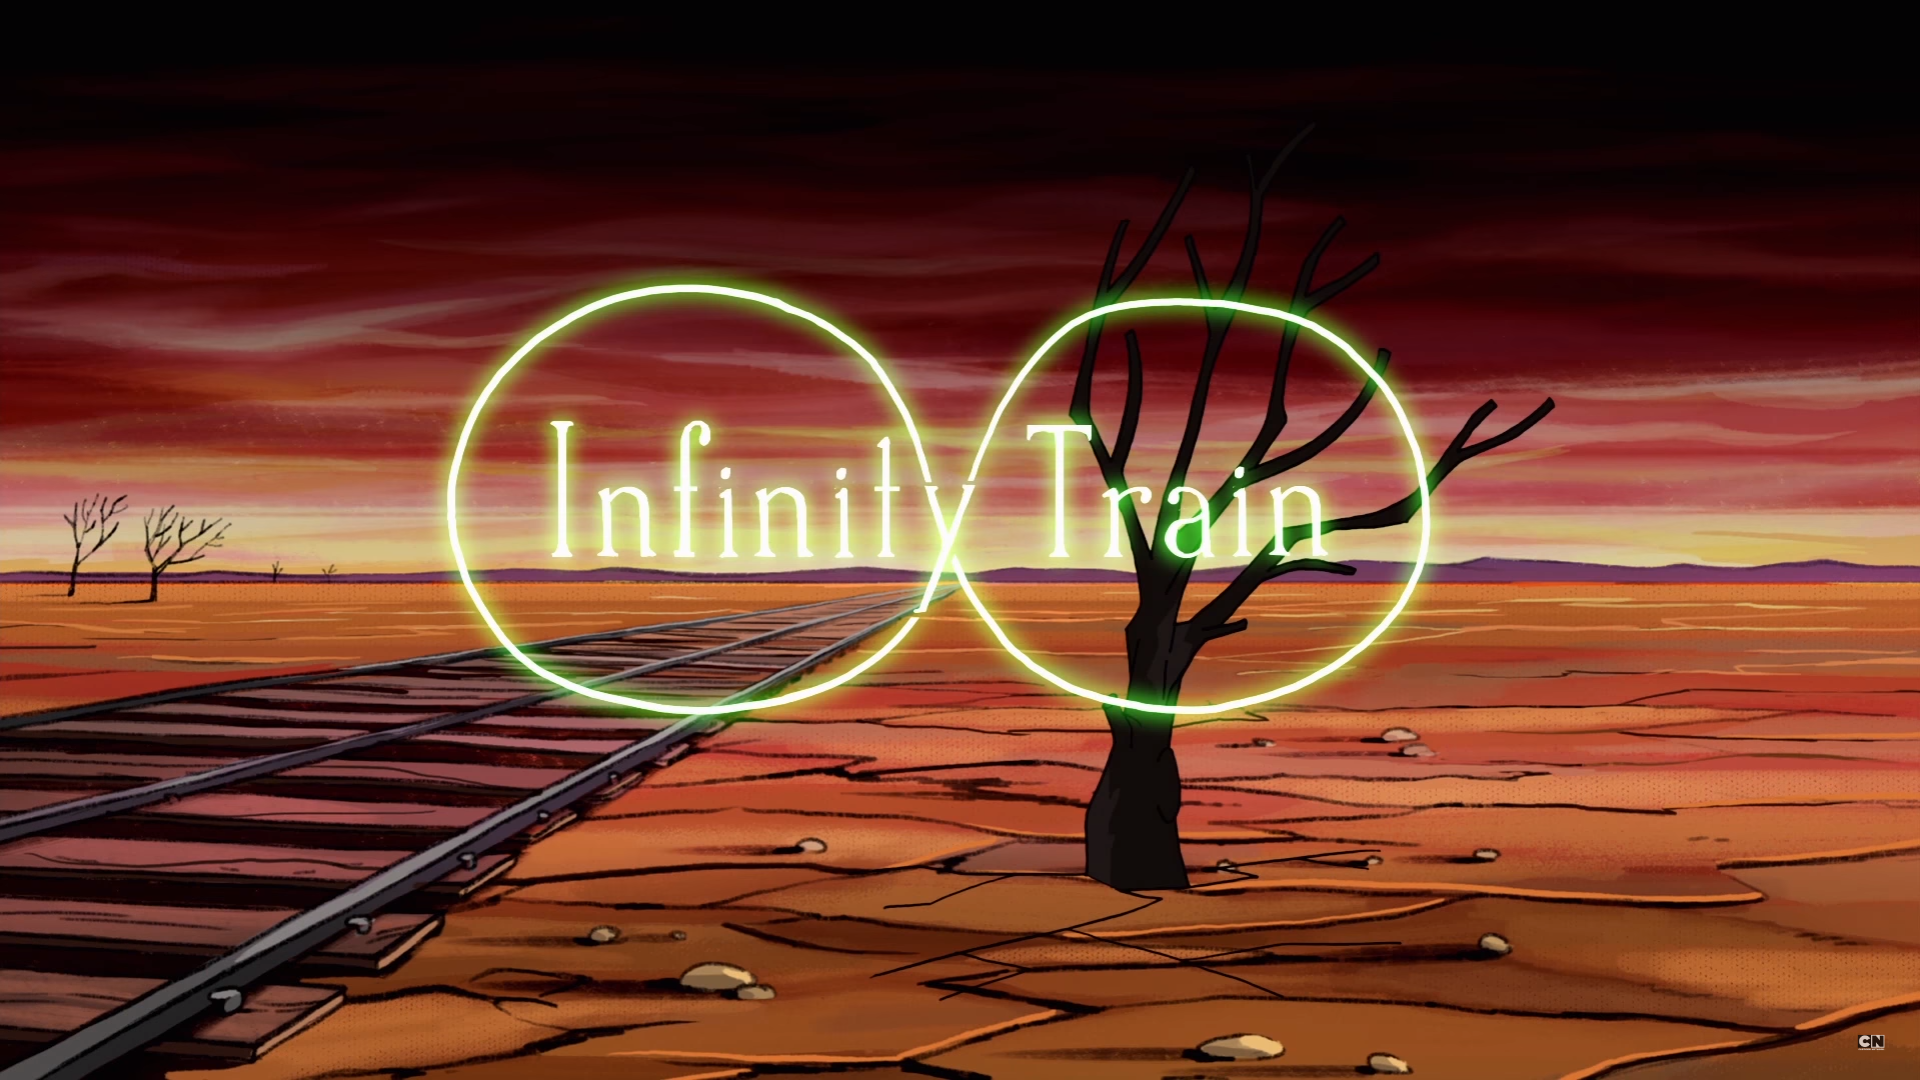 Infinity Train Background